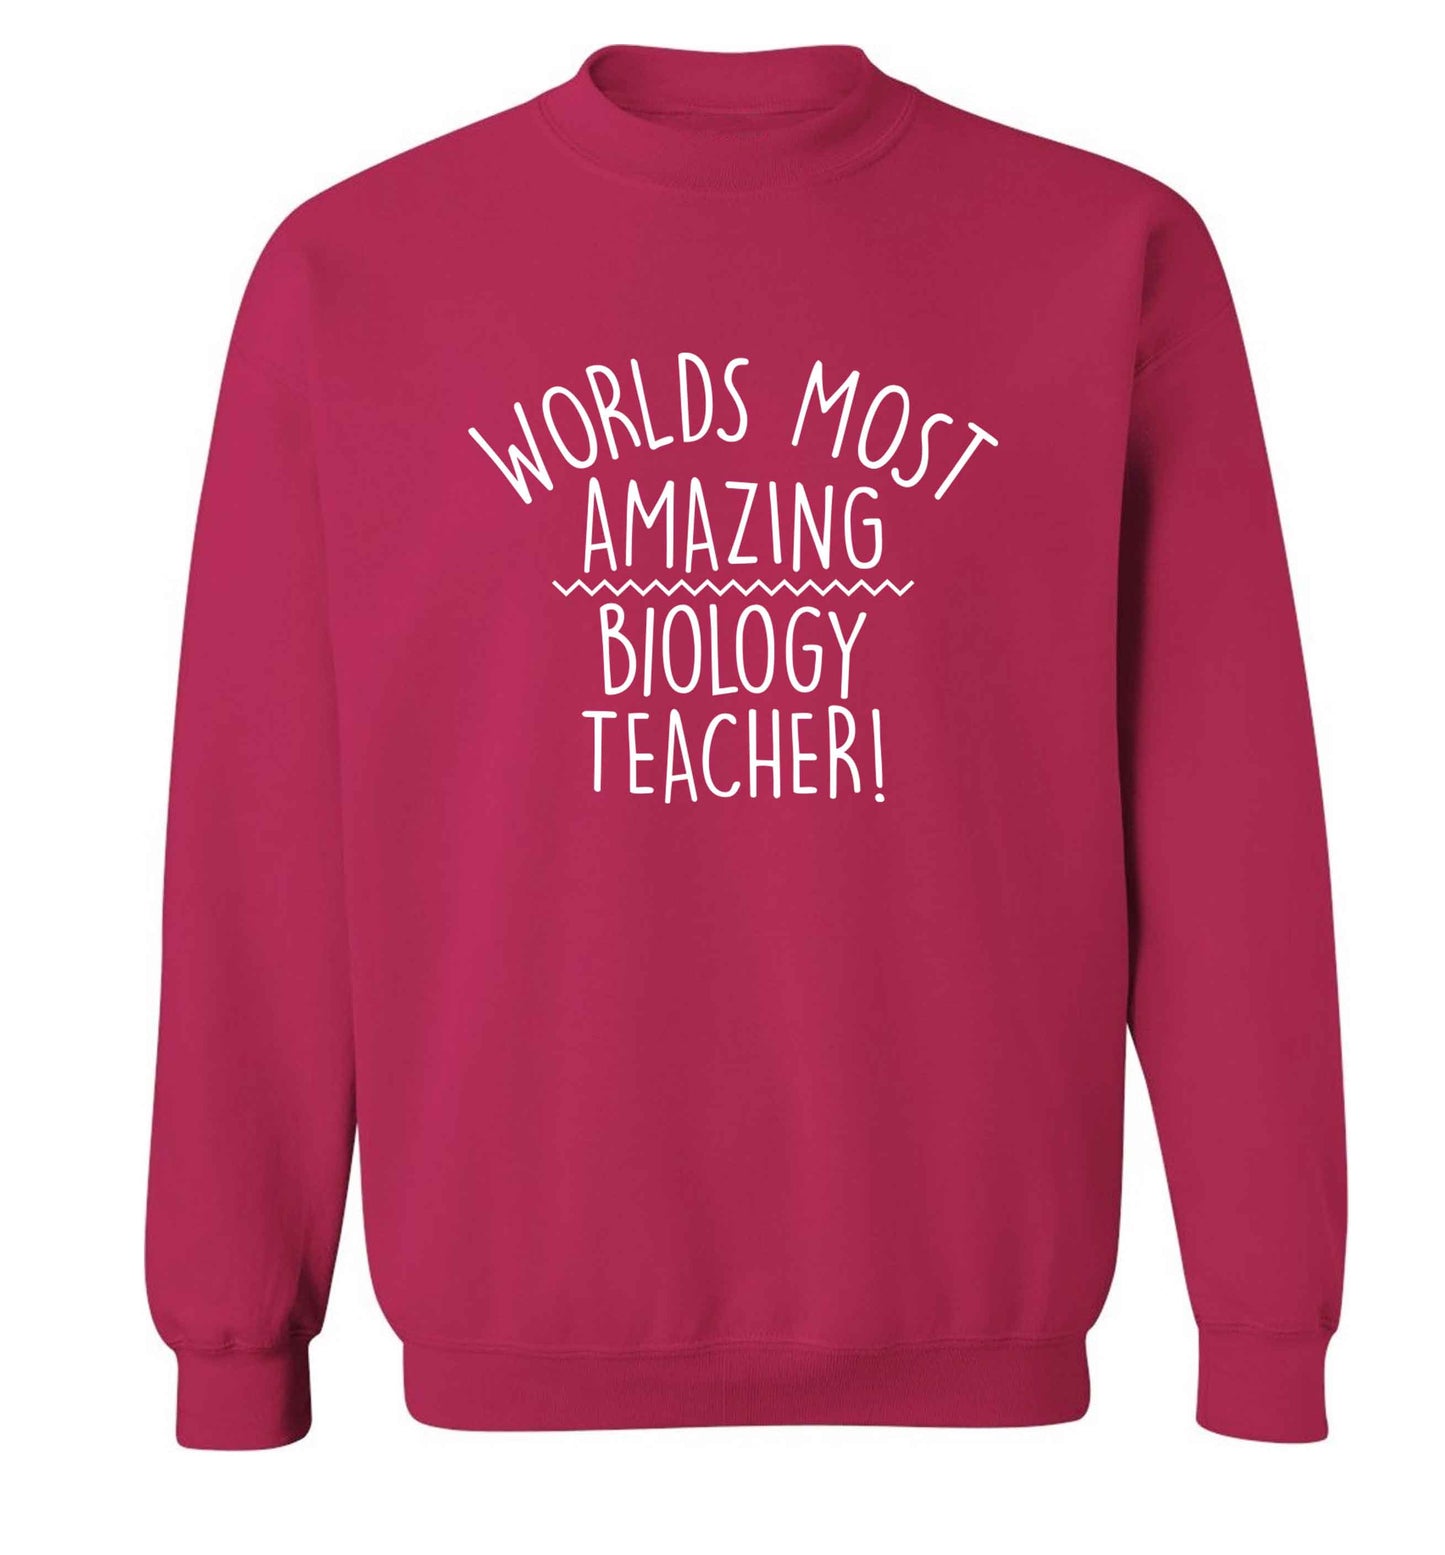 Worlds most amazing biology teacher adult's unisex pink sweater 2XL